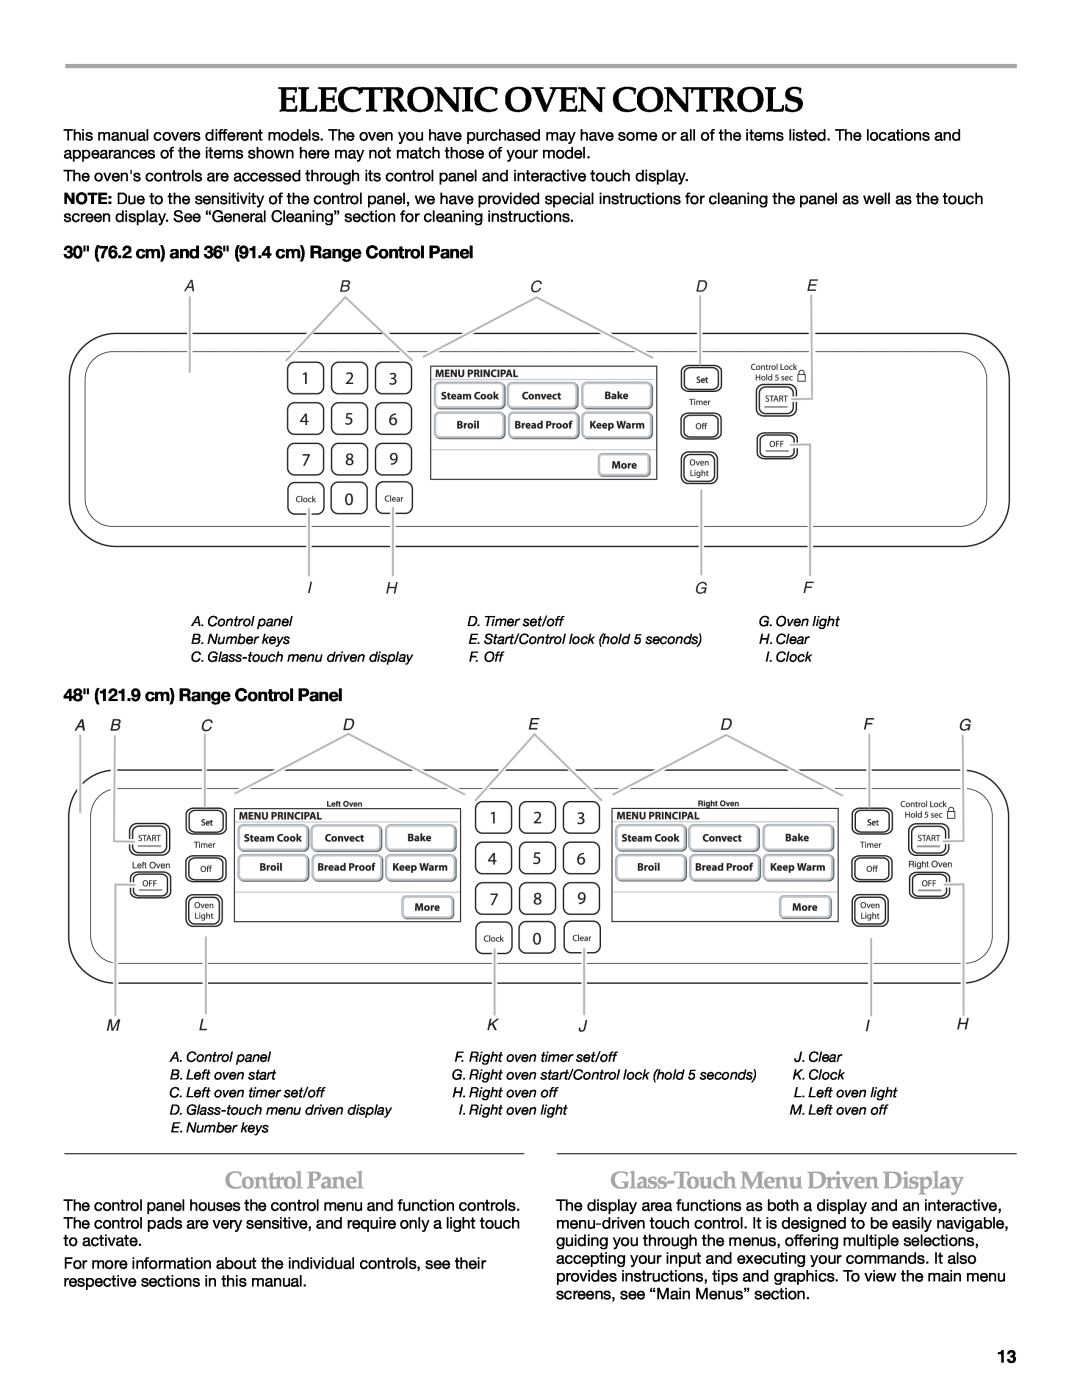 KitchenAid KDRU763.KDRU manual Electronic Oven Controls, Control Panel, Glass-Touch Menu DrivenDisplay, Abcde 